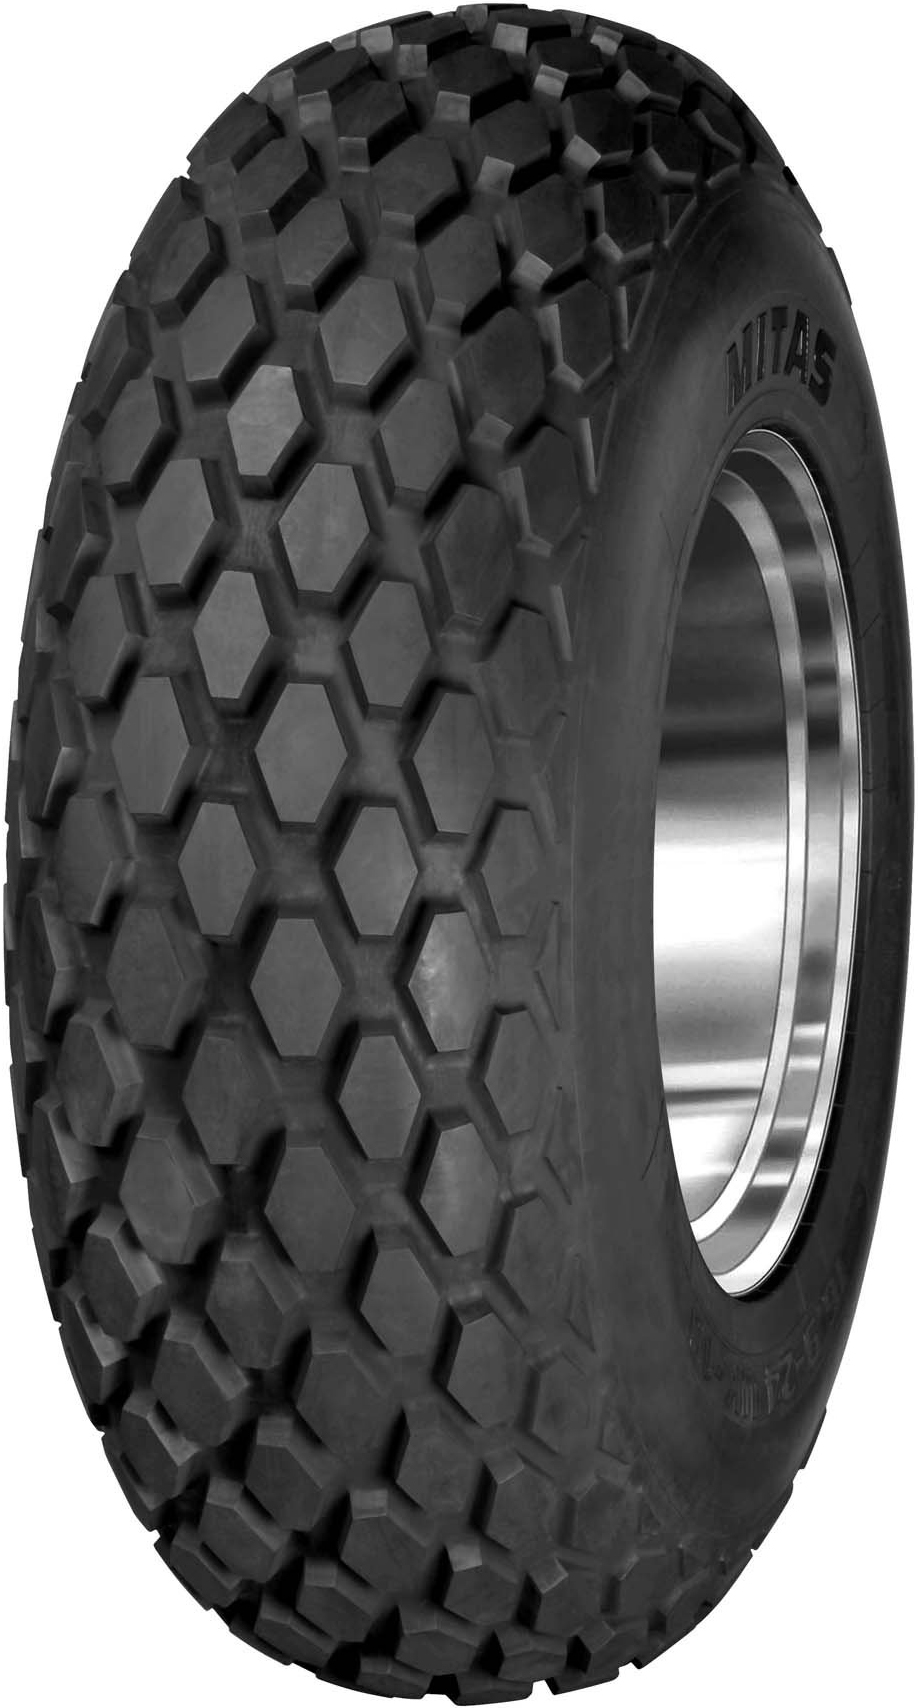 product_type-industrial_tires MITAS UK-10 8 TL 16.9 R24 129B